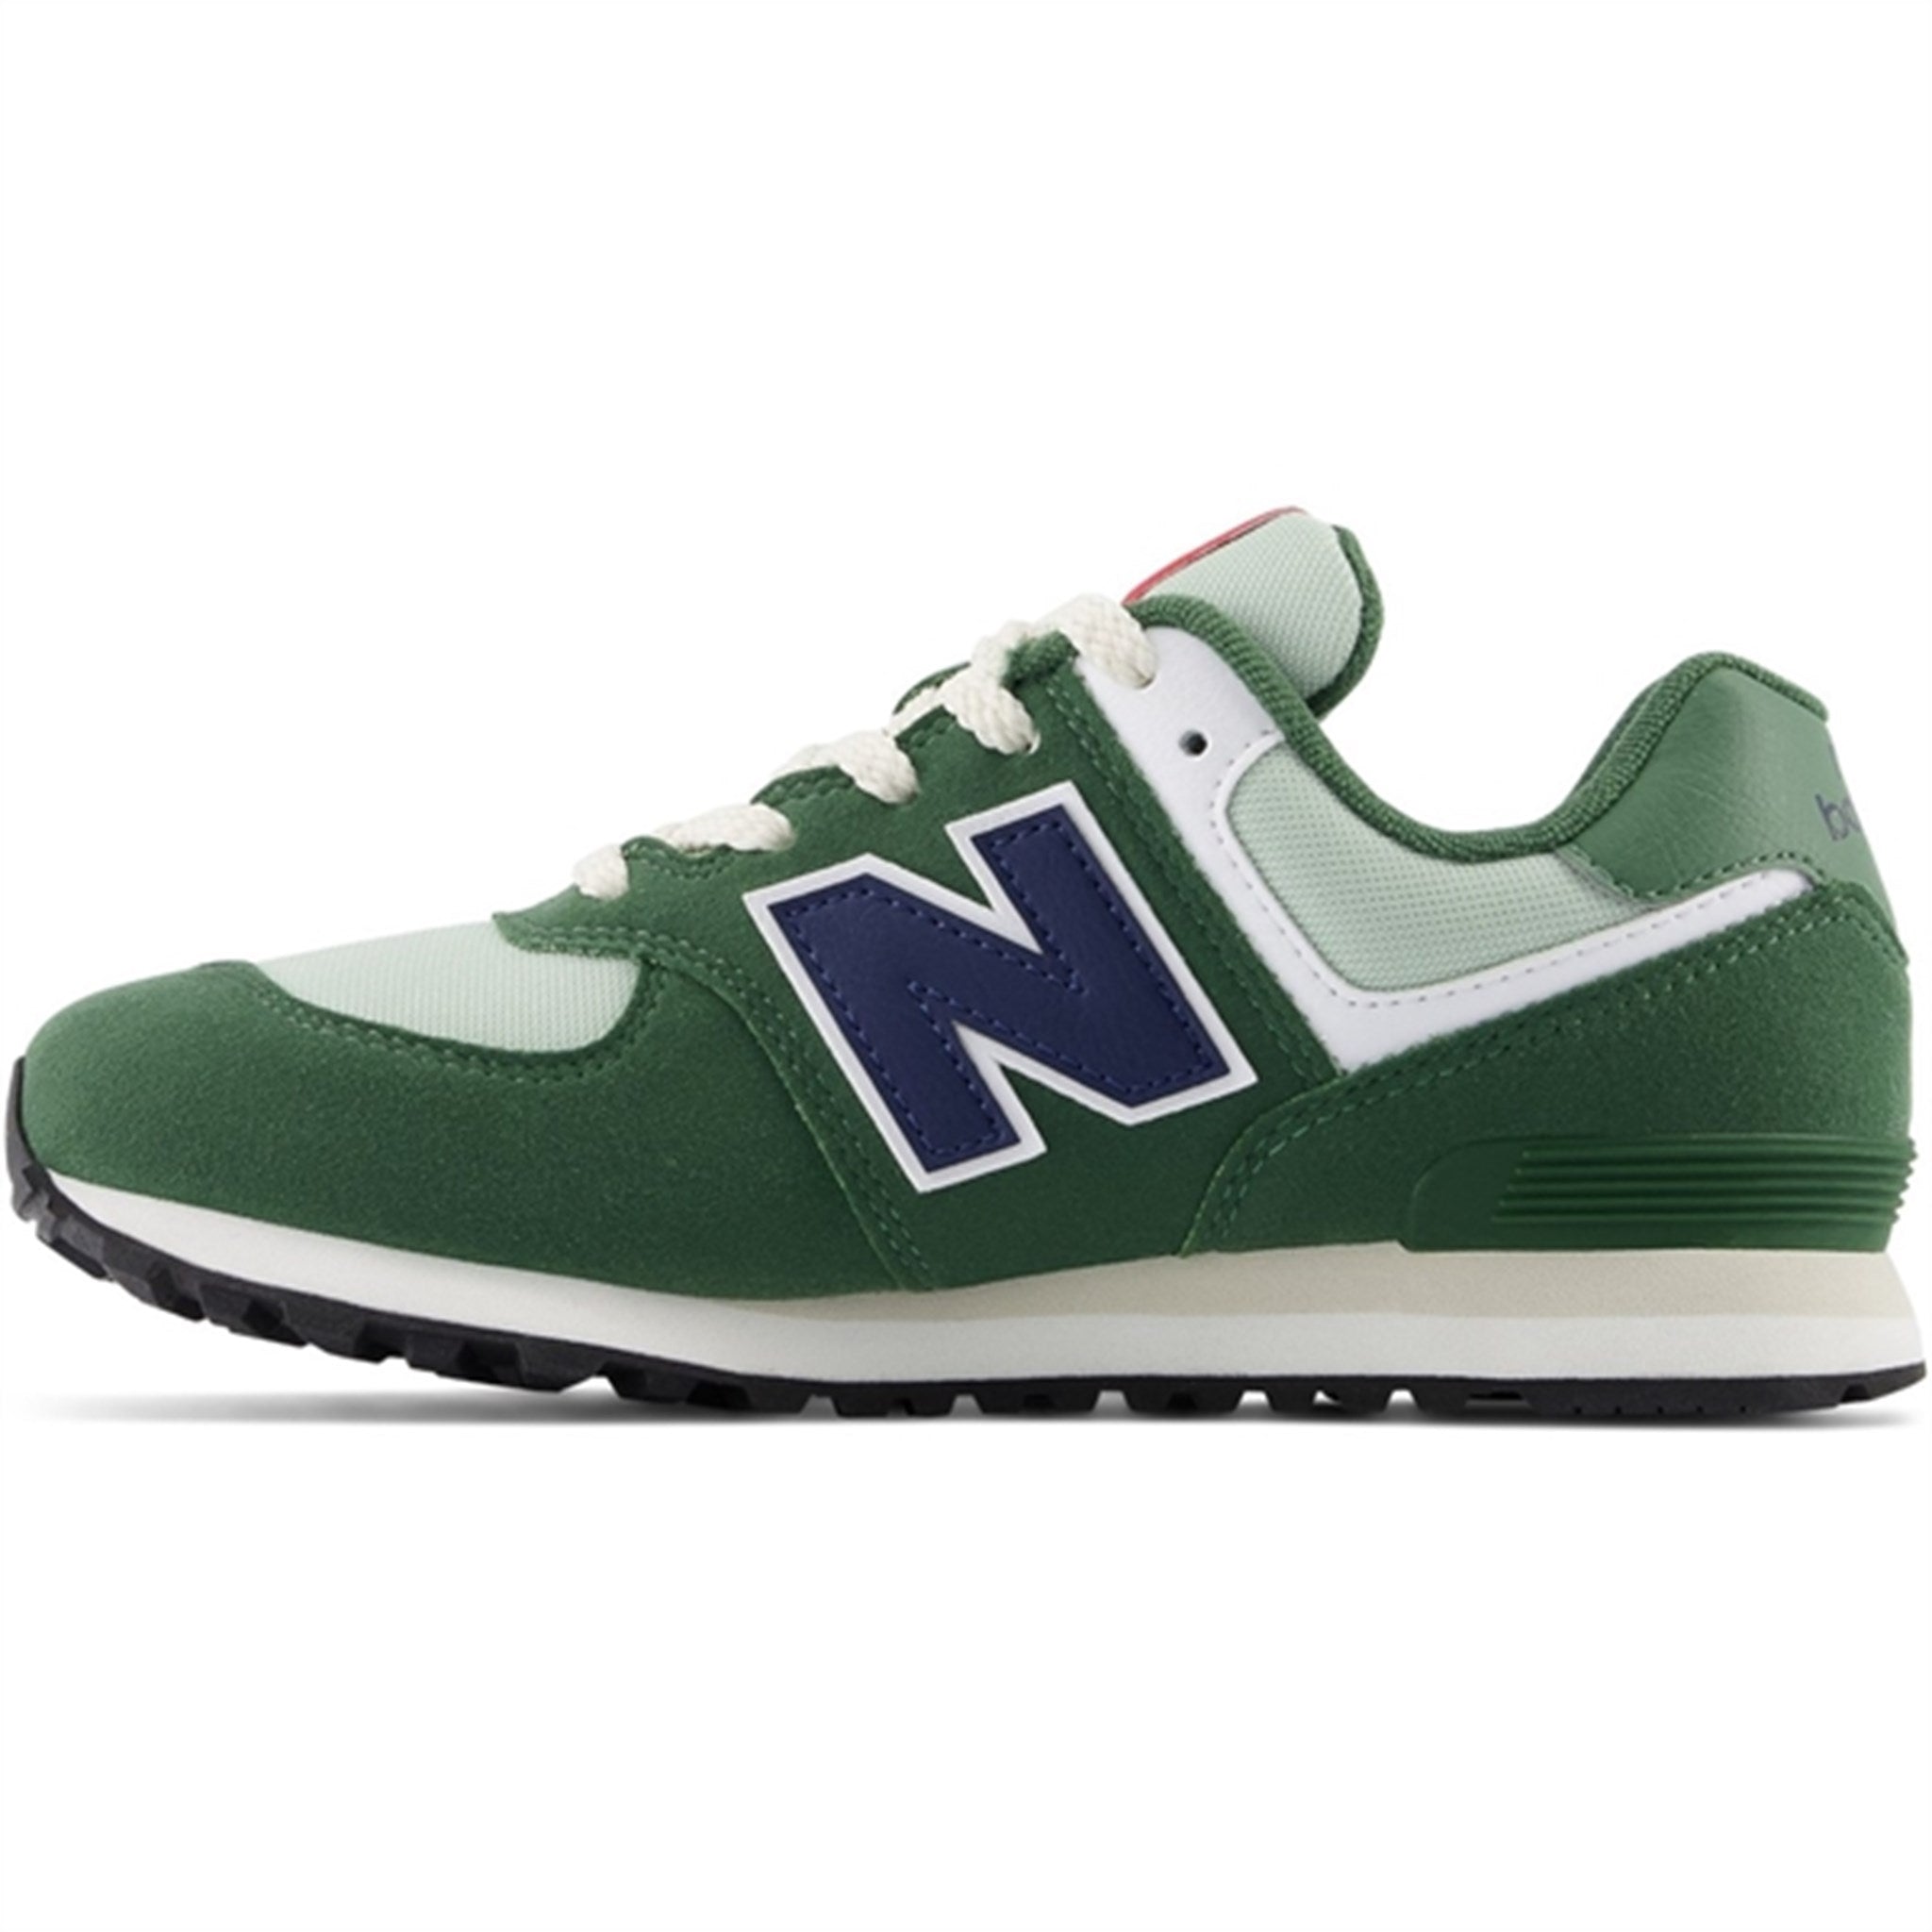 New Balance 574 Sneakers Nori 4